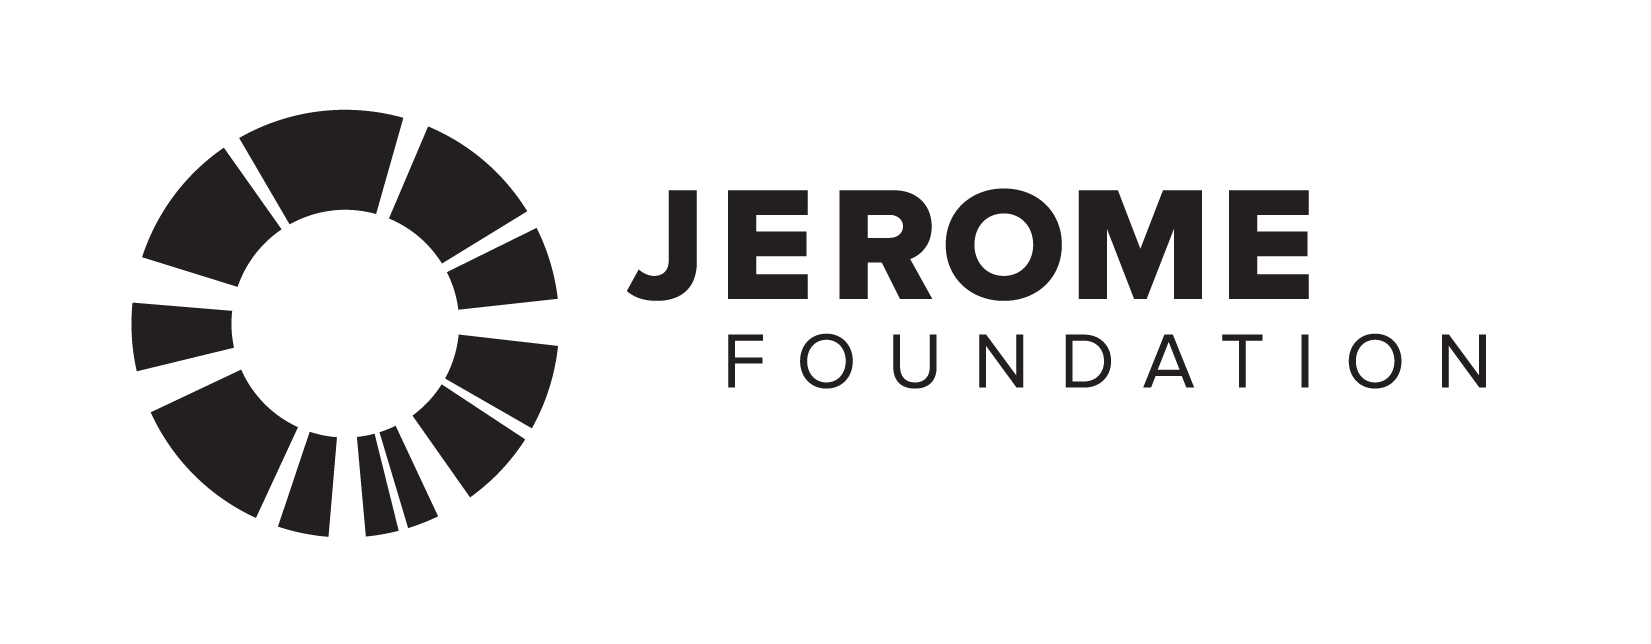 Jerome_logo.png